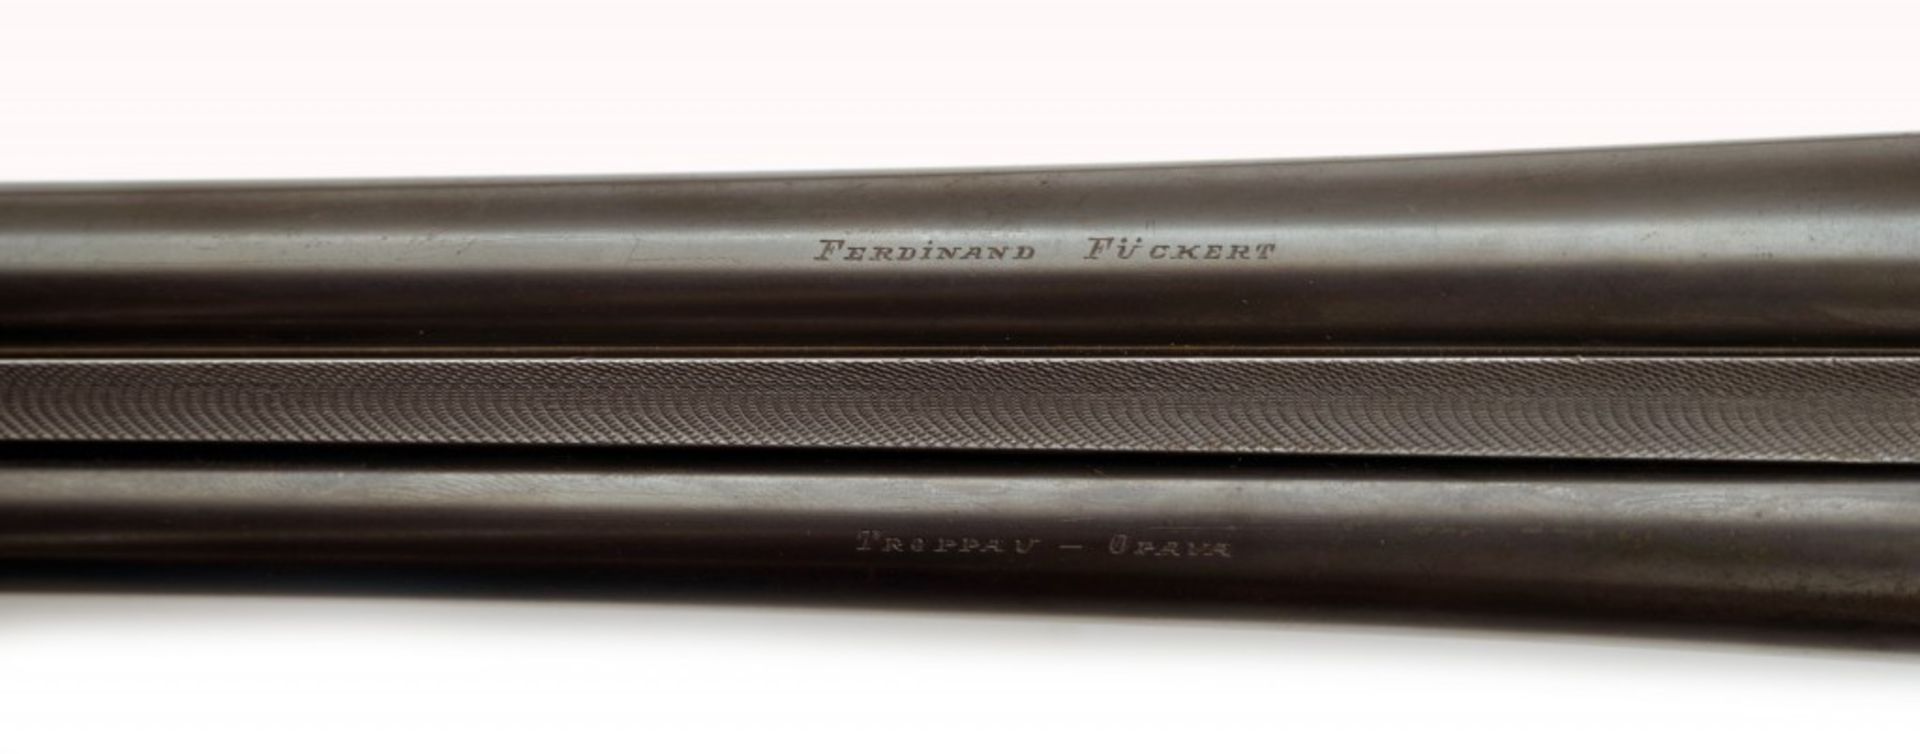 A Double-barrelled Shotgun, Ferdinand Fückert, Troppau (Opava) - Image 5 of 6